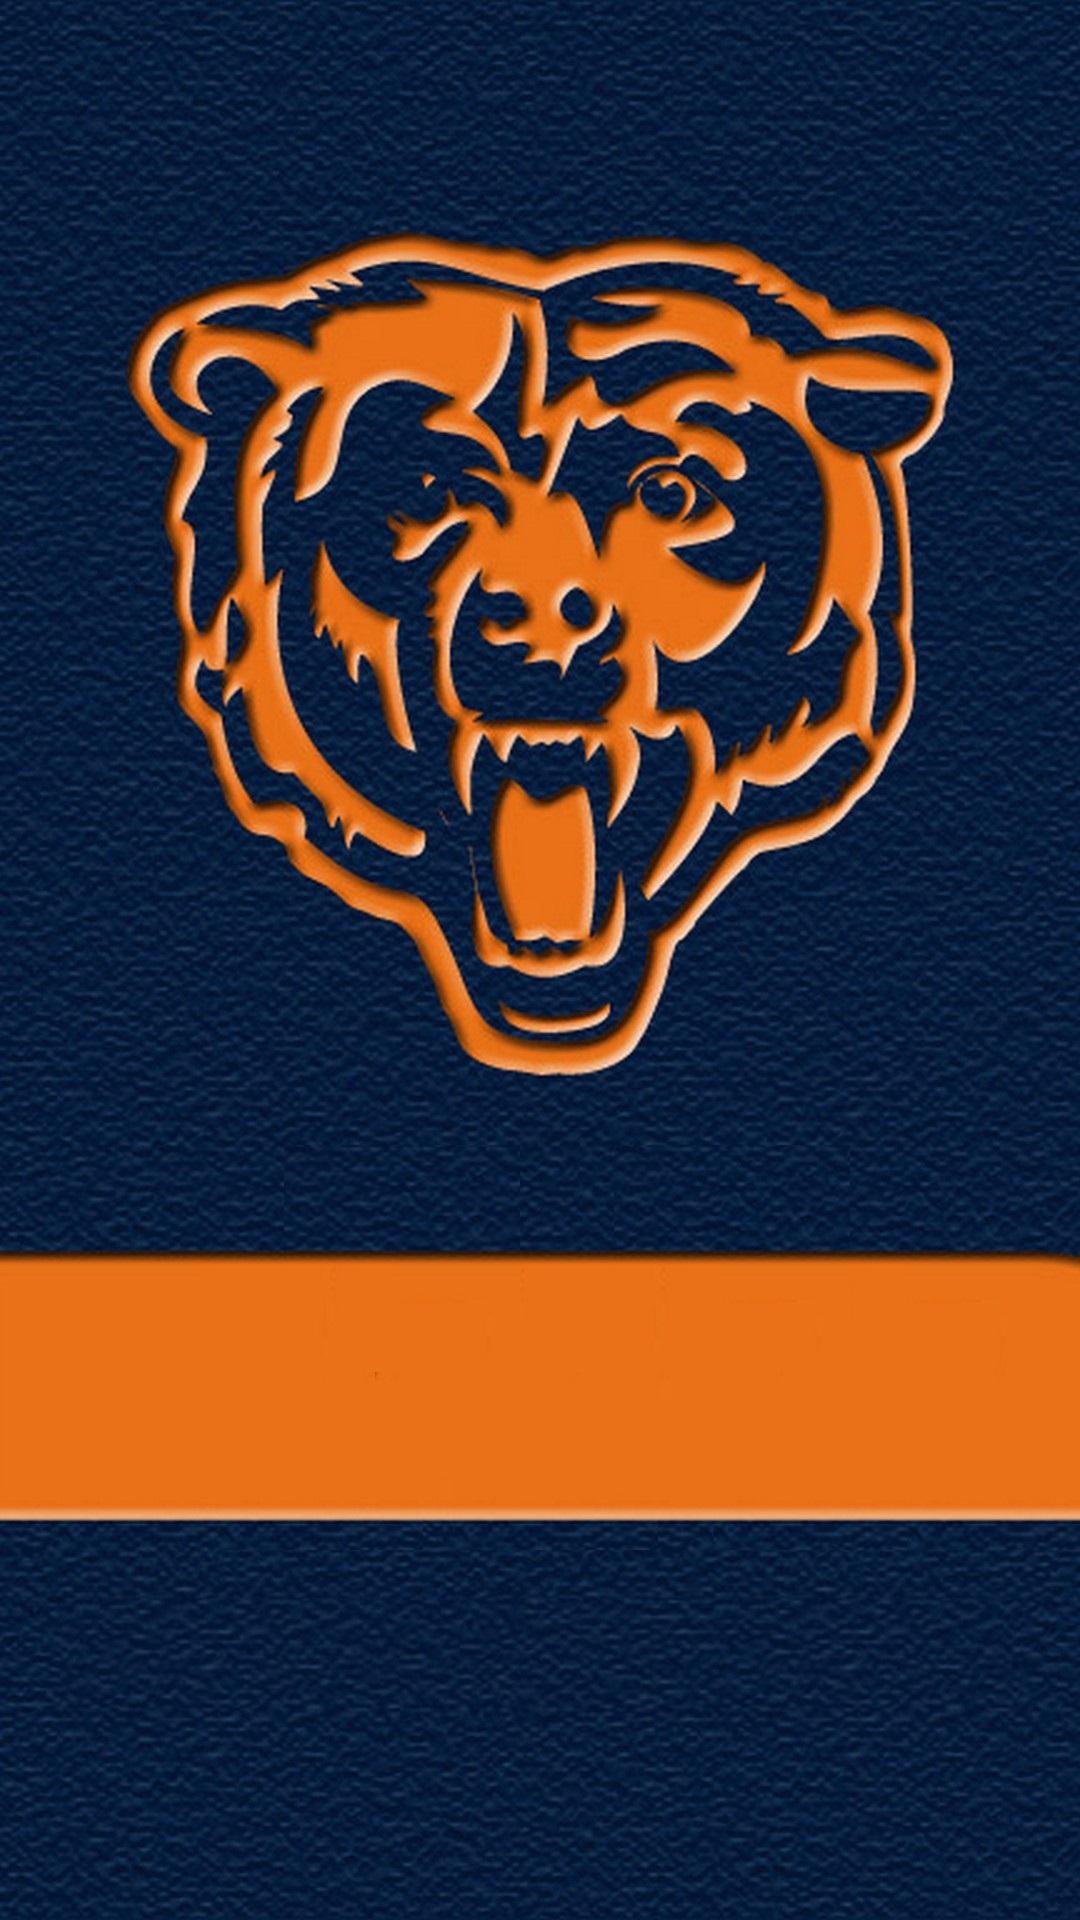 Chicago Bears iPhone 7 Wallpaper NFL Wallpaper